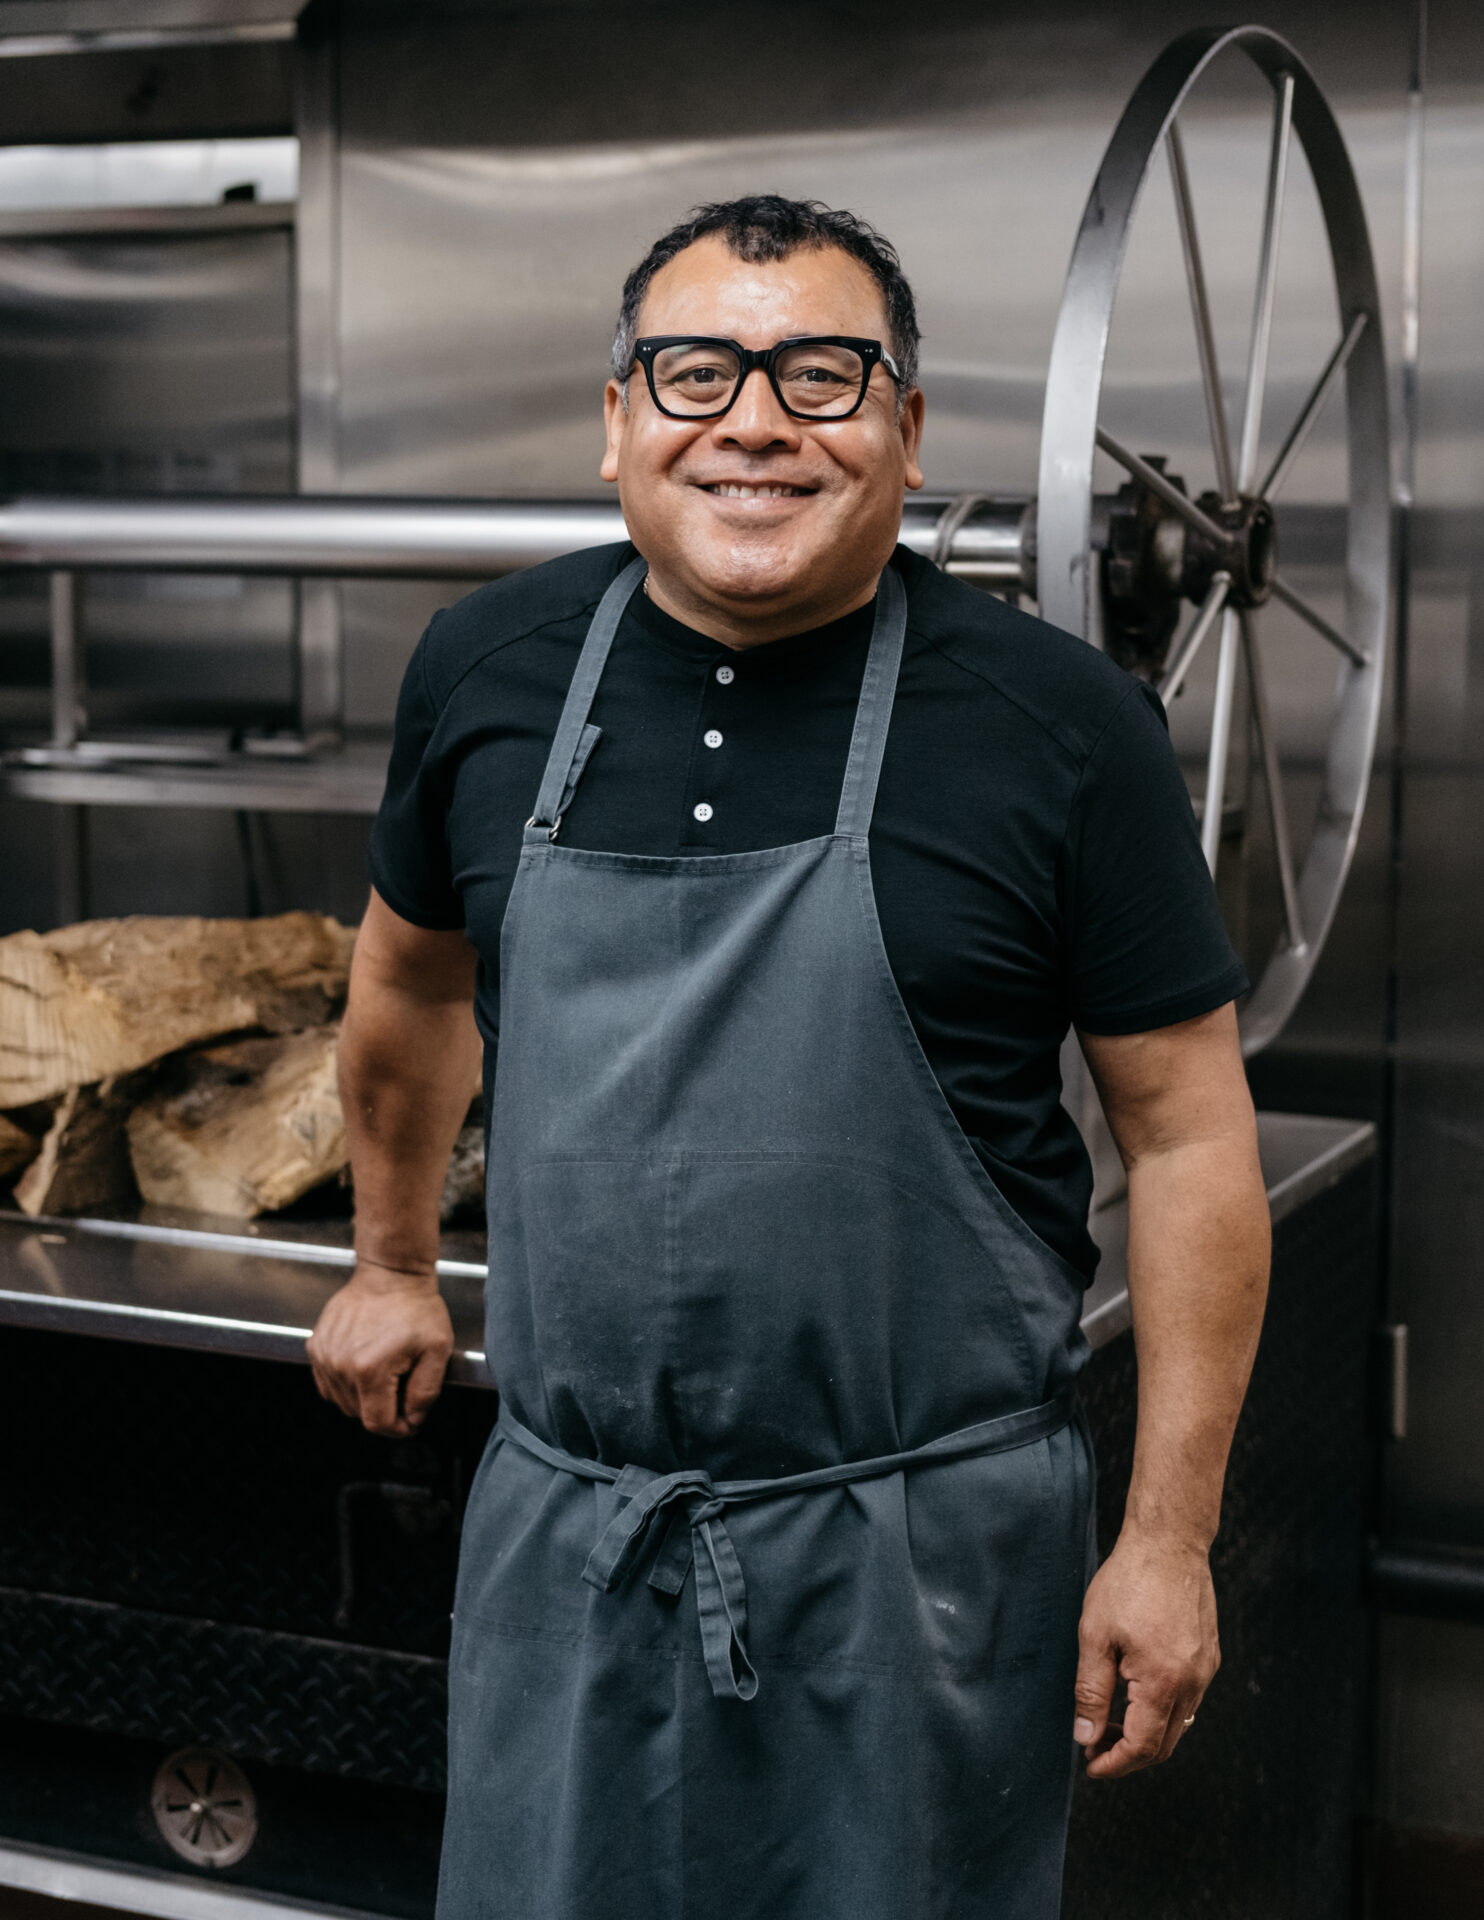 Ruben Ortega shares his recipe for pan de muerto